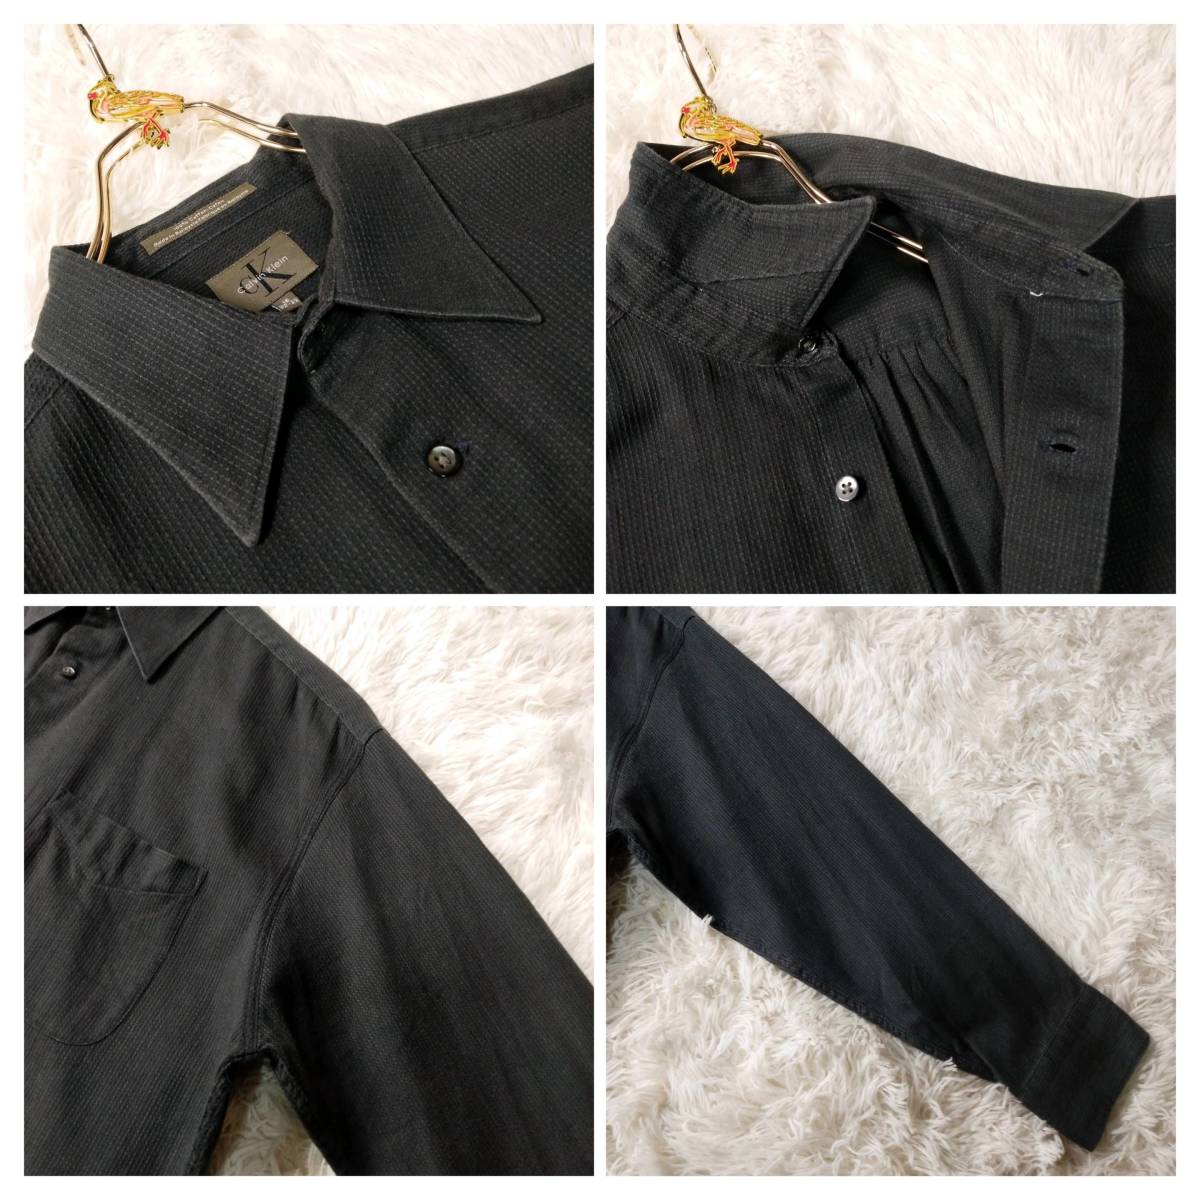 [US import old clothes ]CK Calvin Klein Calvin Klein long sleeve shirt casual shirt M size L size XL size dark gray grey men's 